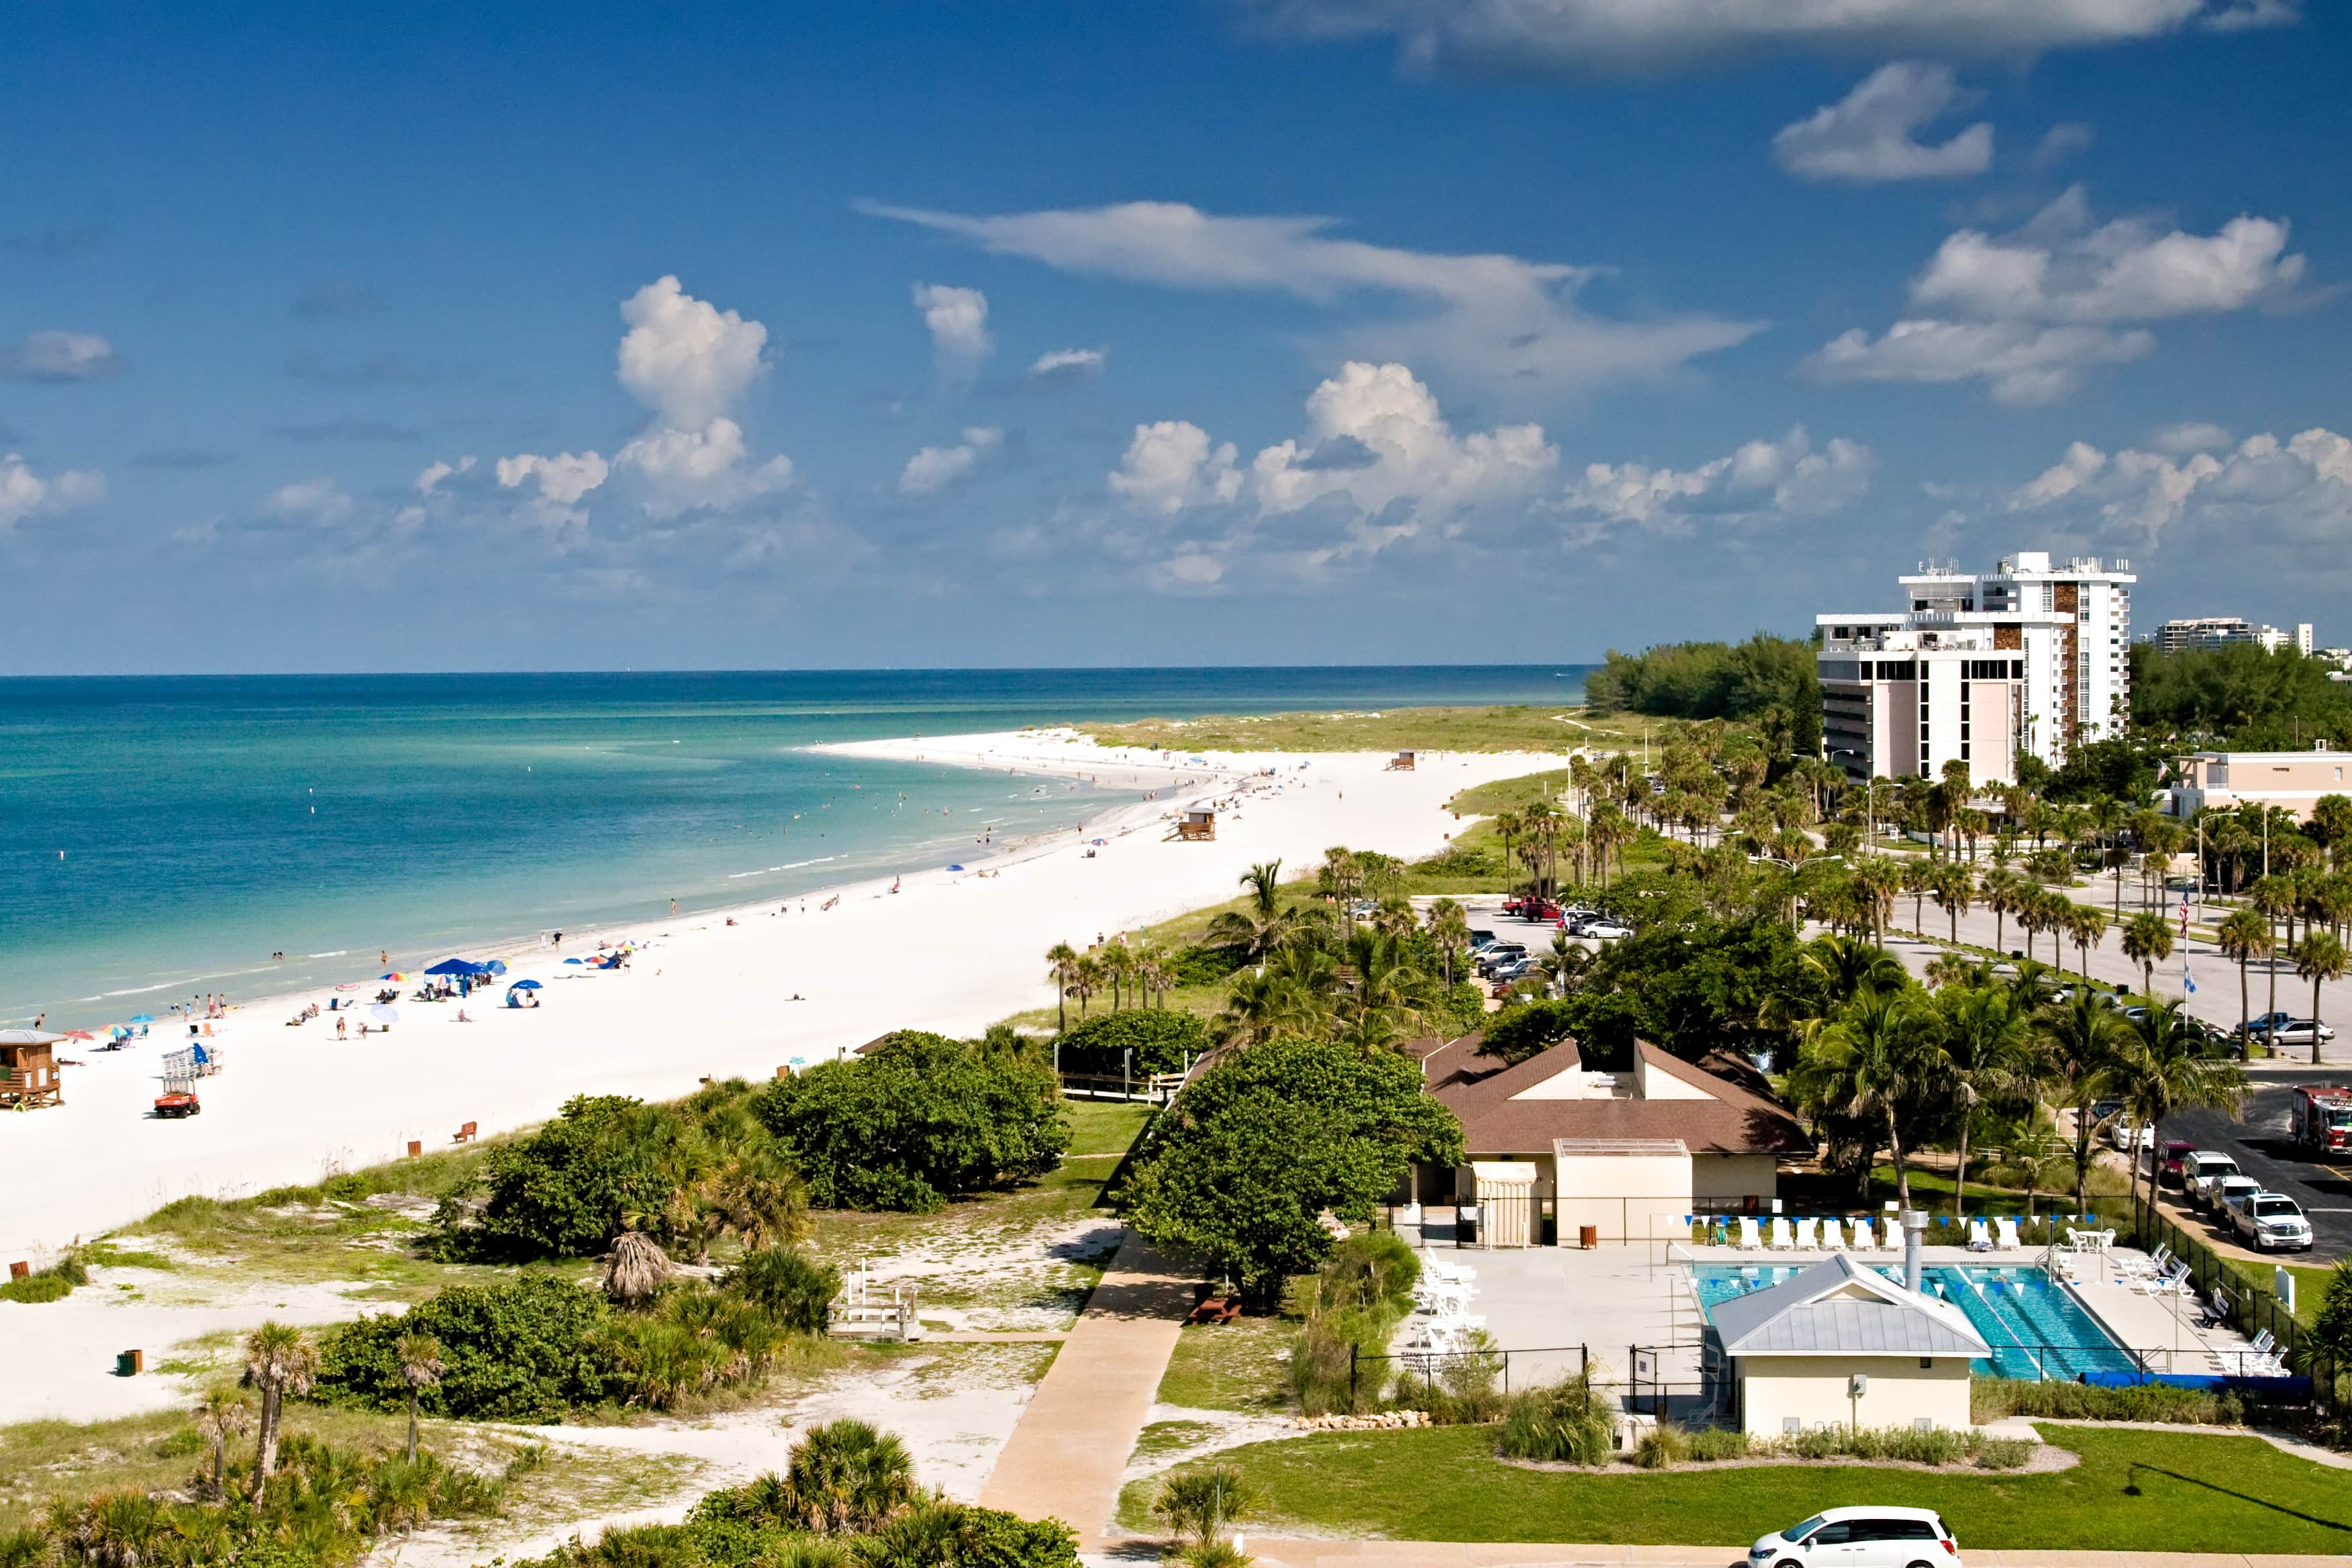 15 Closest Hotels To Siesta Key Public Beach In Siesta Key | Hotels - Map Of Hotels In Siesta Key Florida